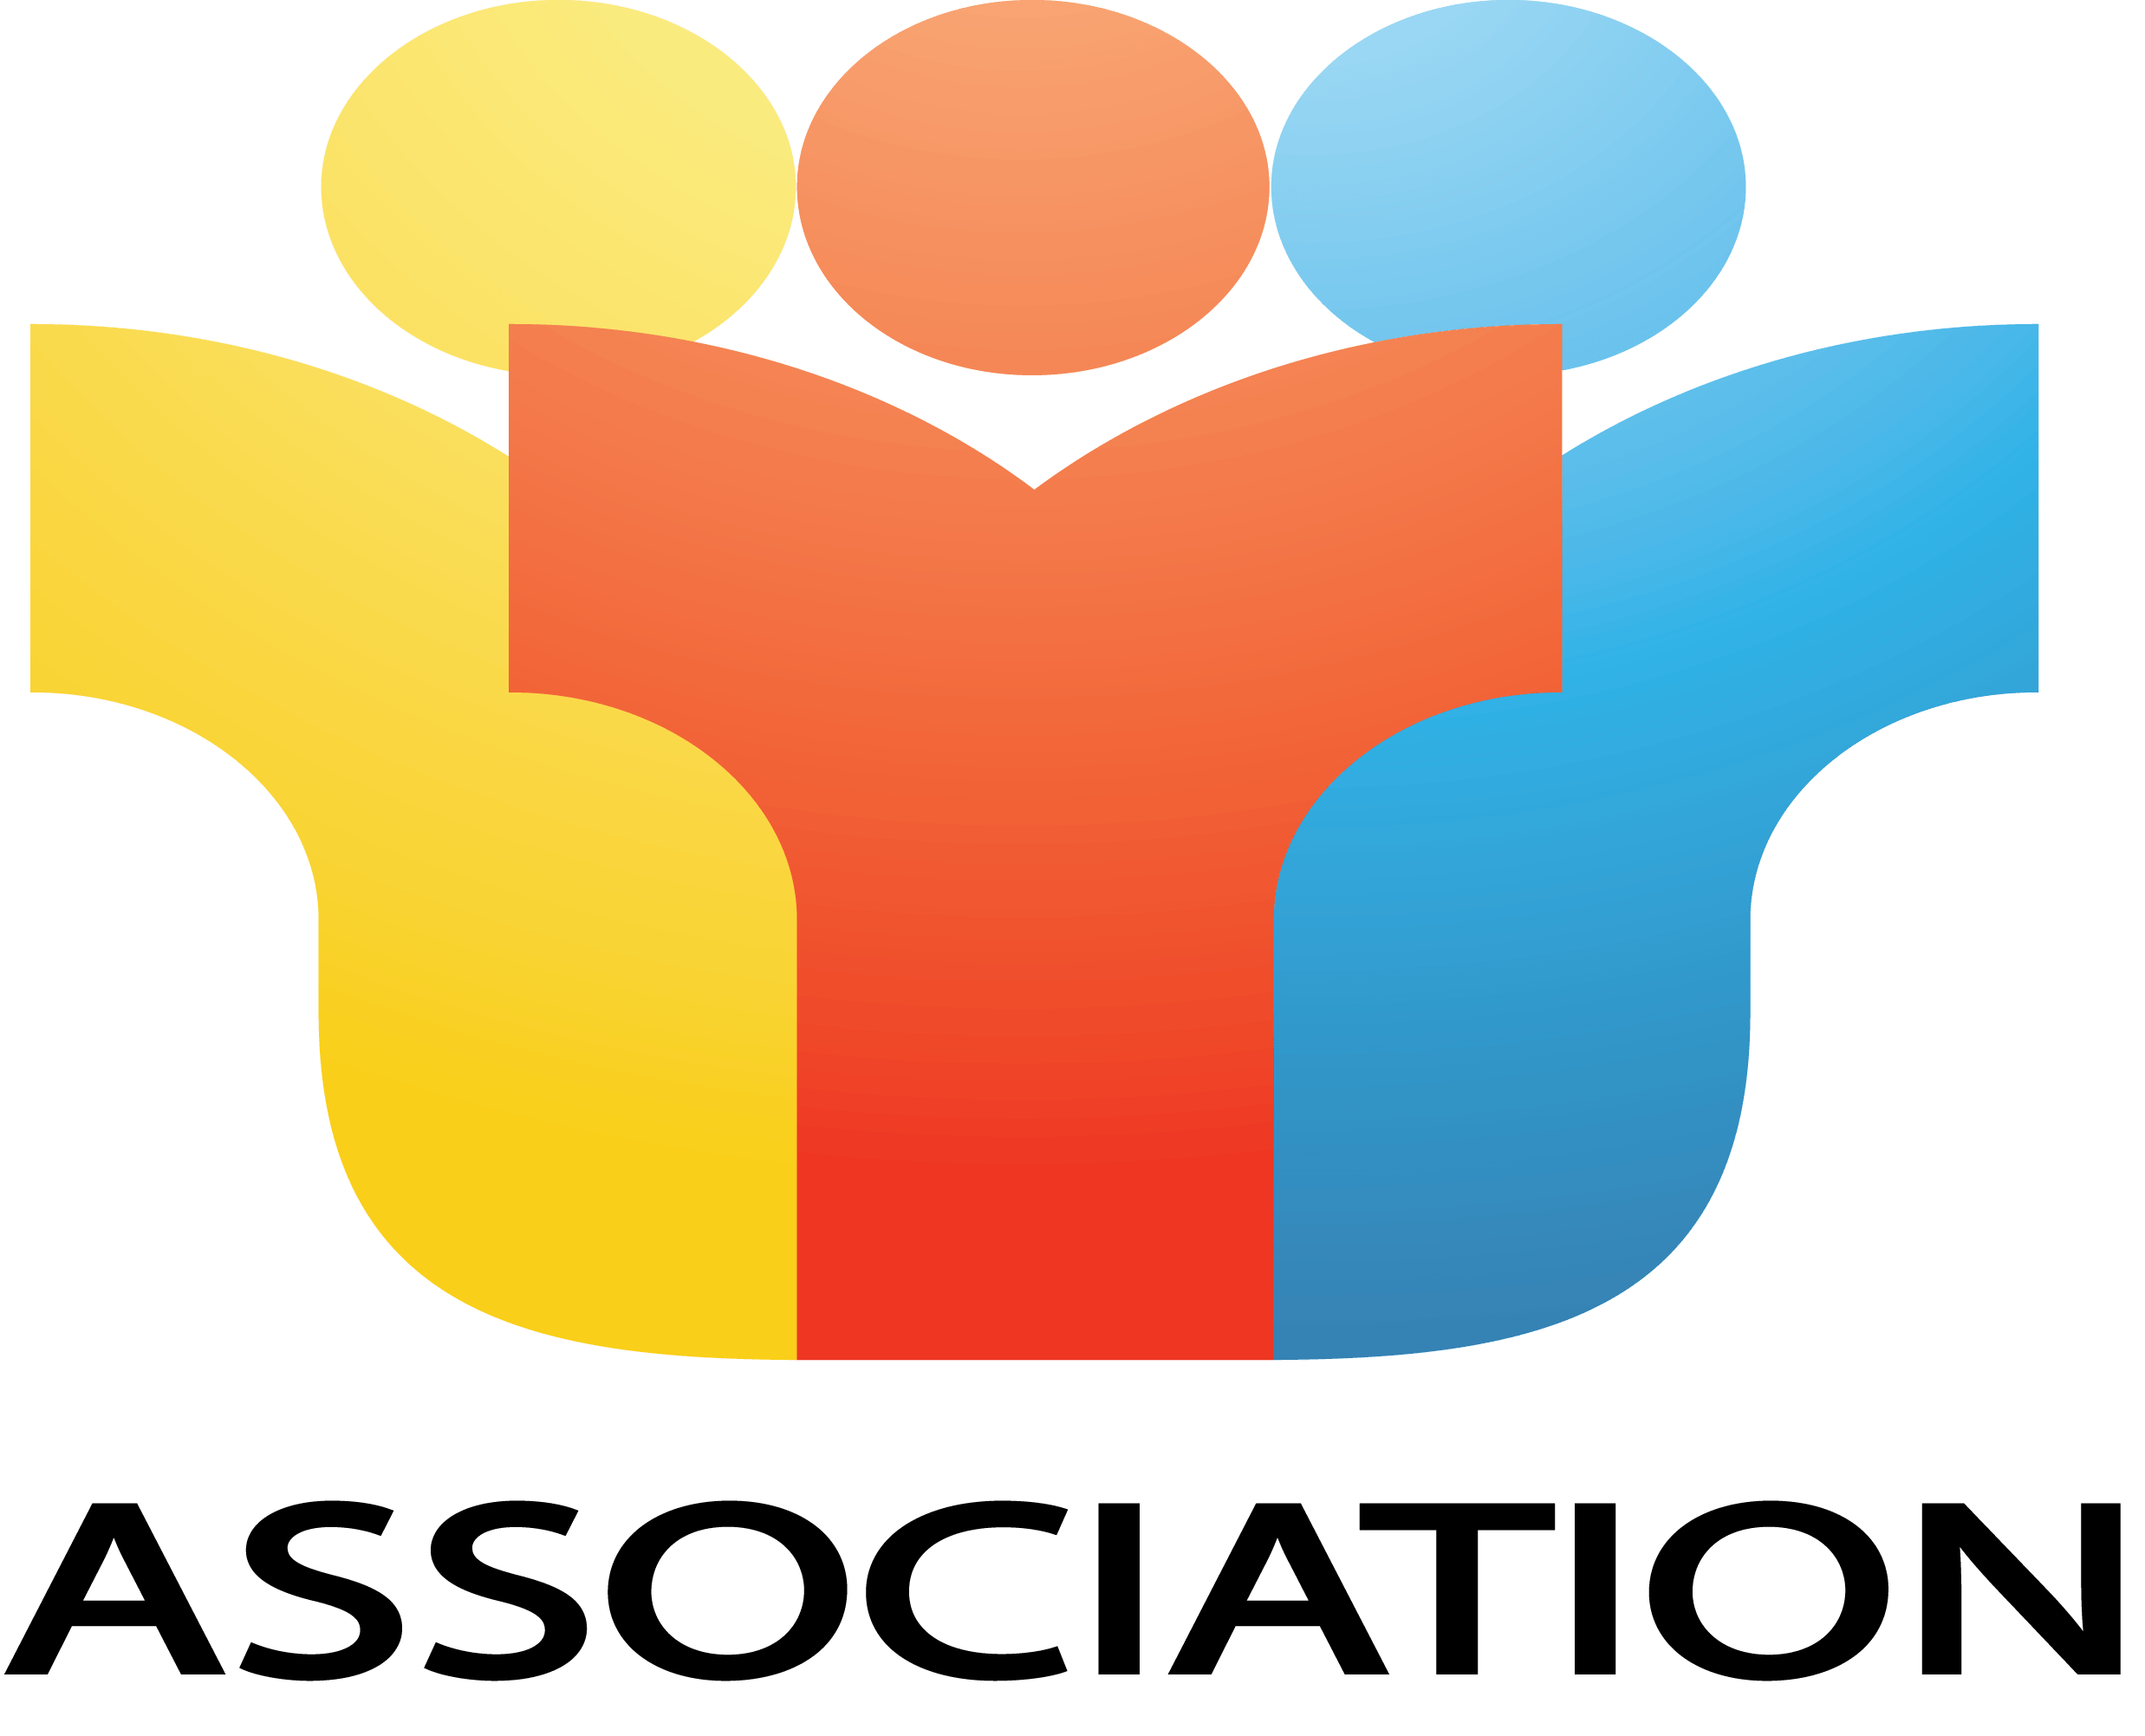 Association Logo - In association with Logos